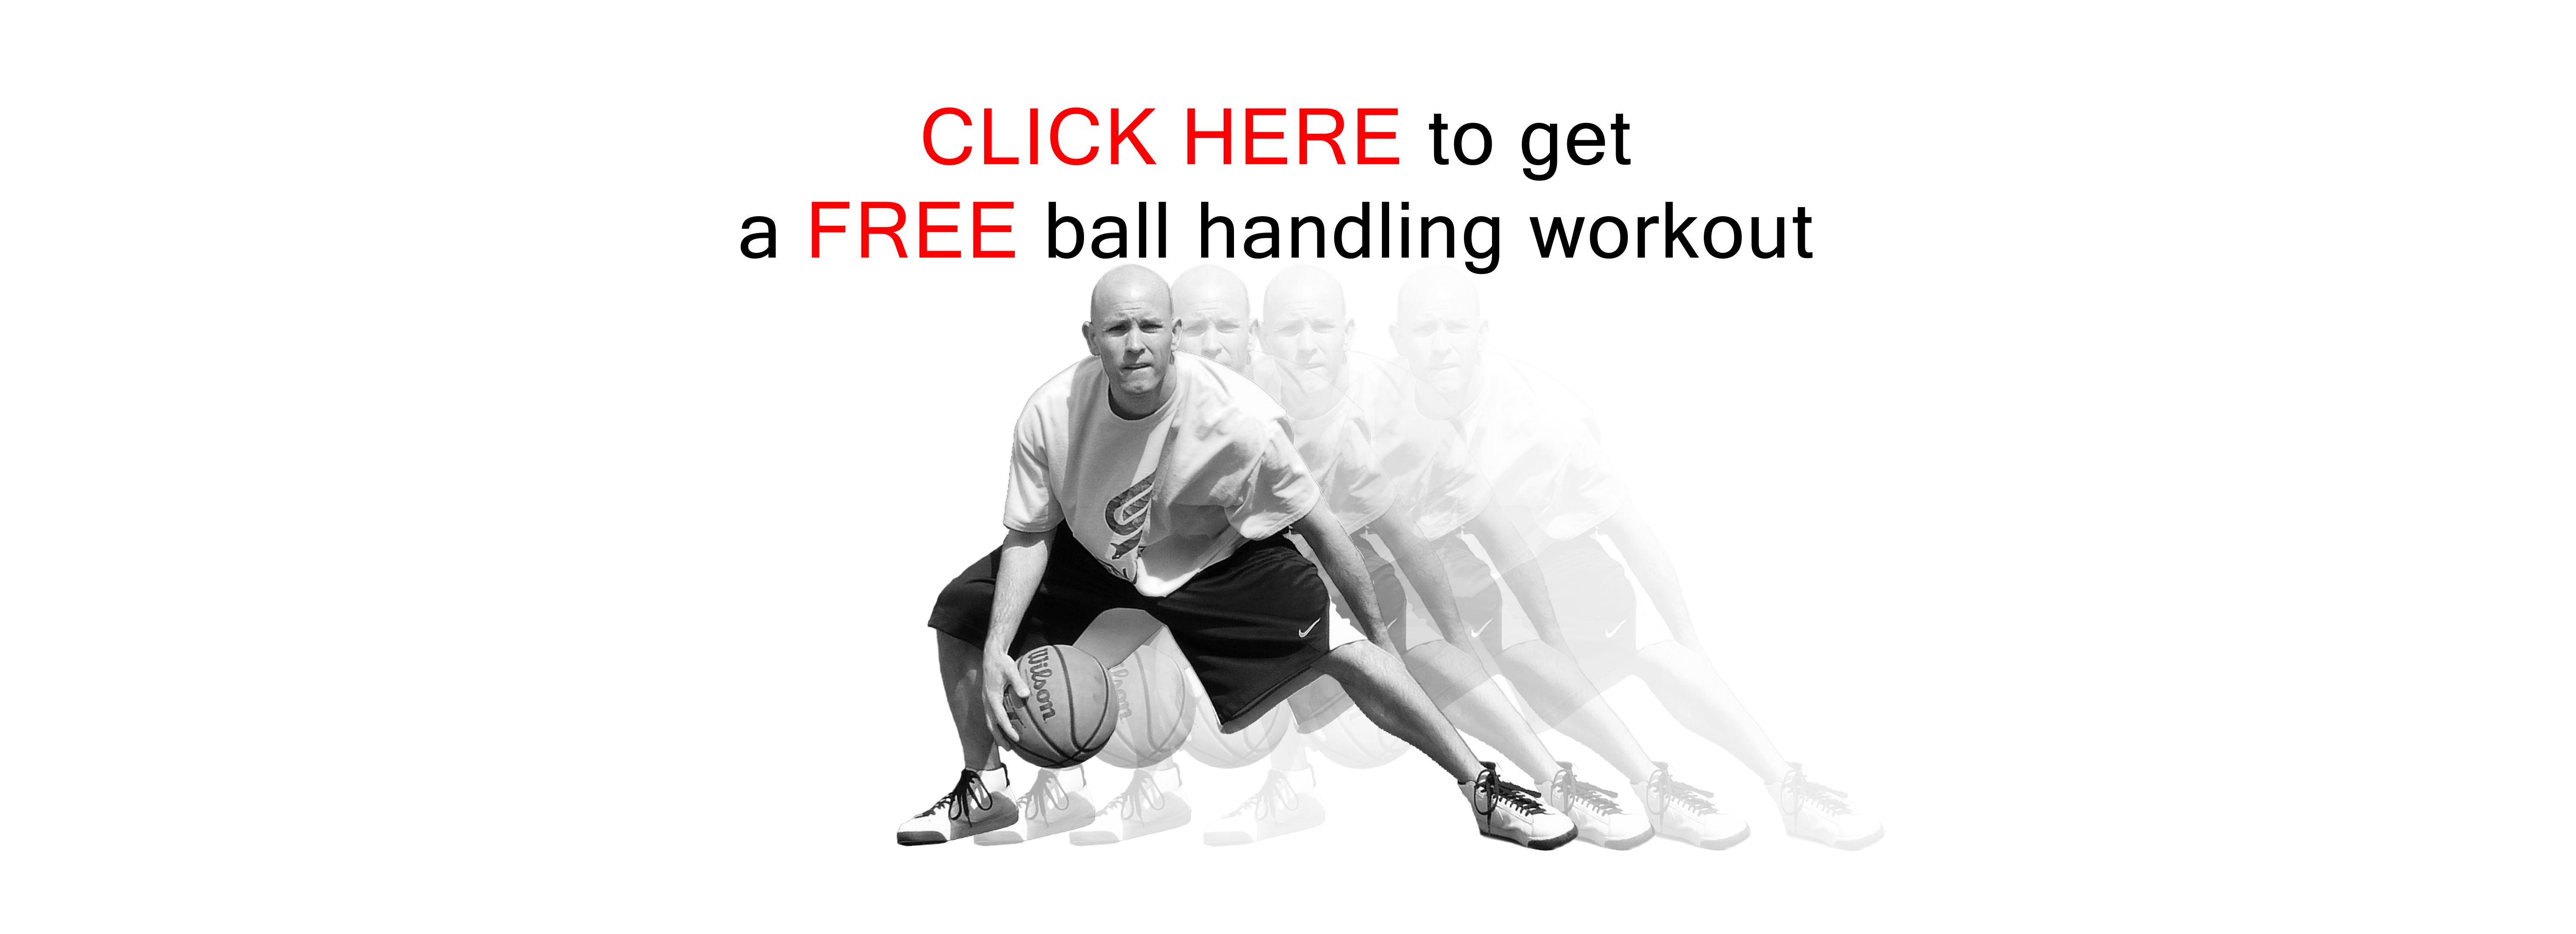 FREE Ball Handling Workout at GetHandles.com